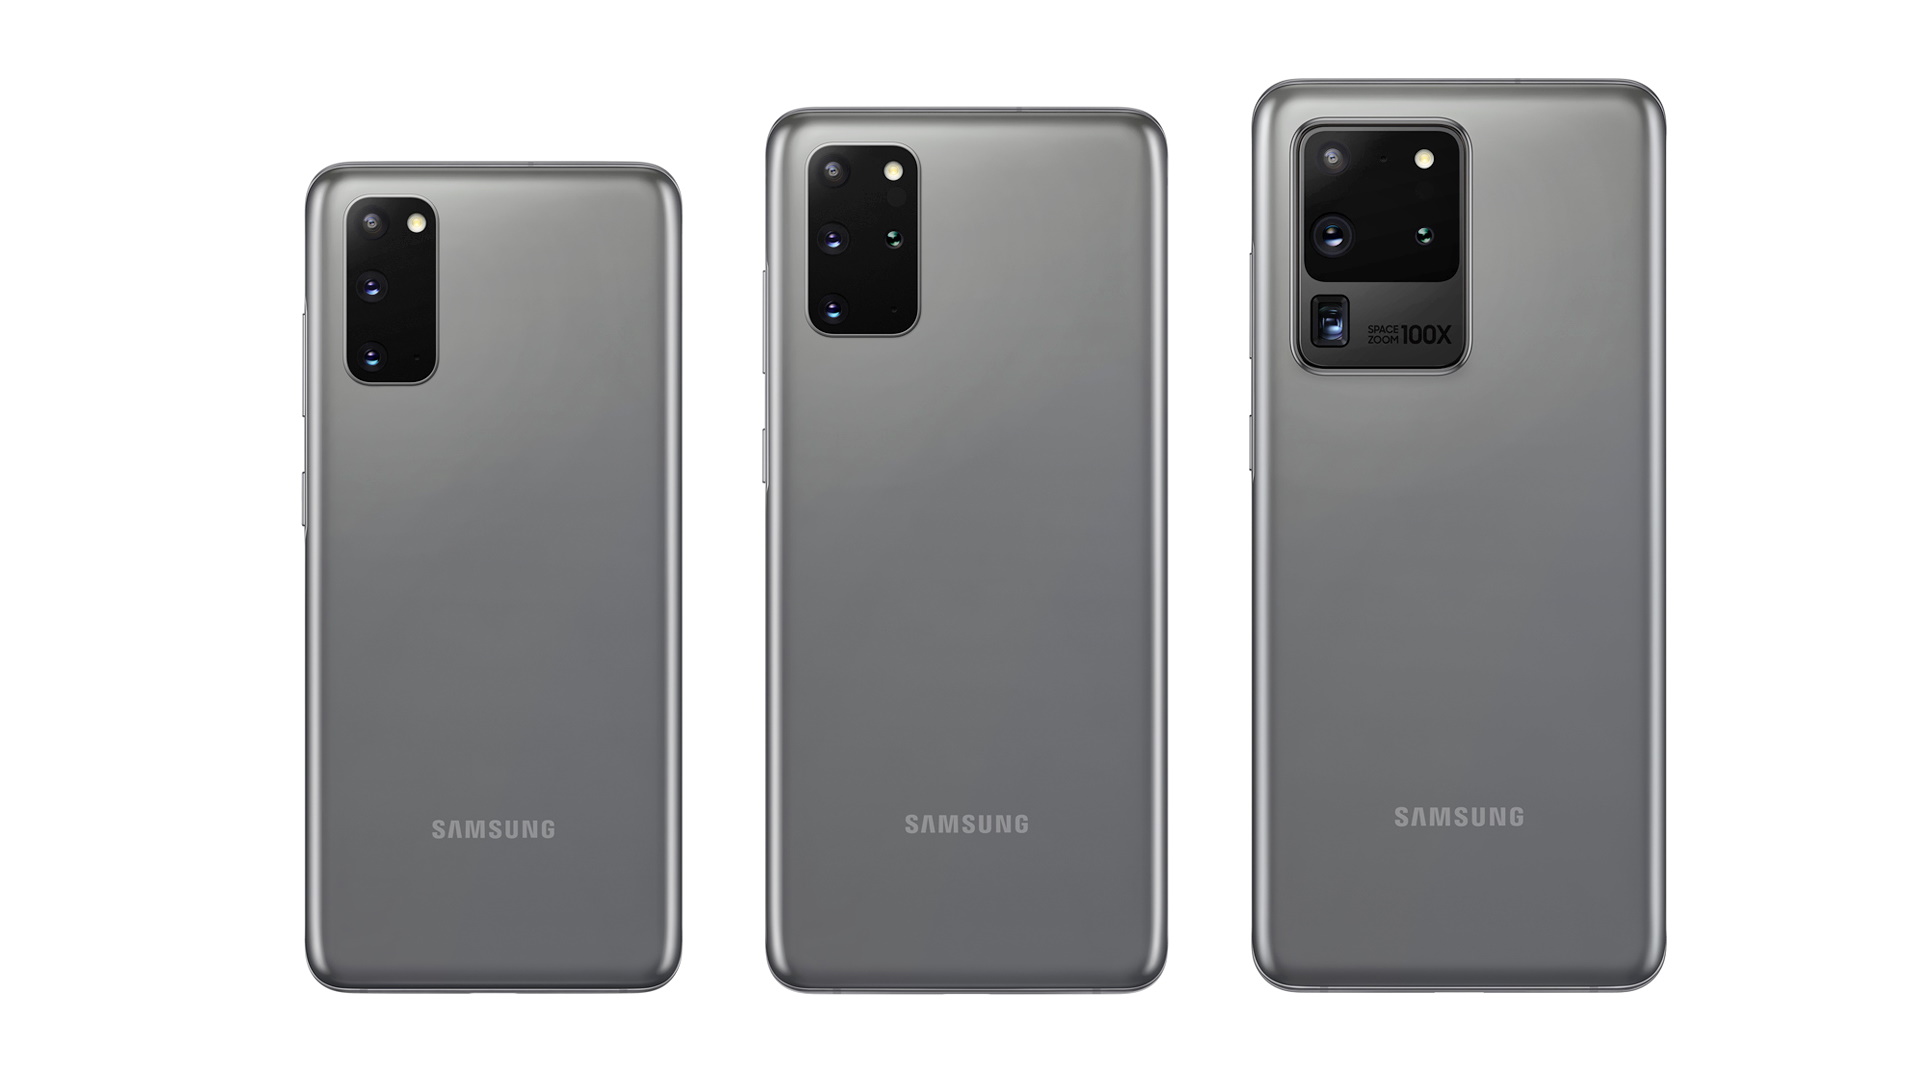 Samsung Galaxy s20 Plus